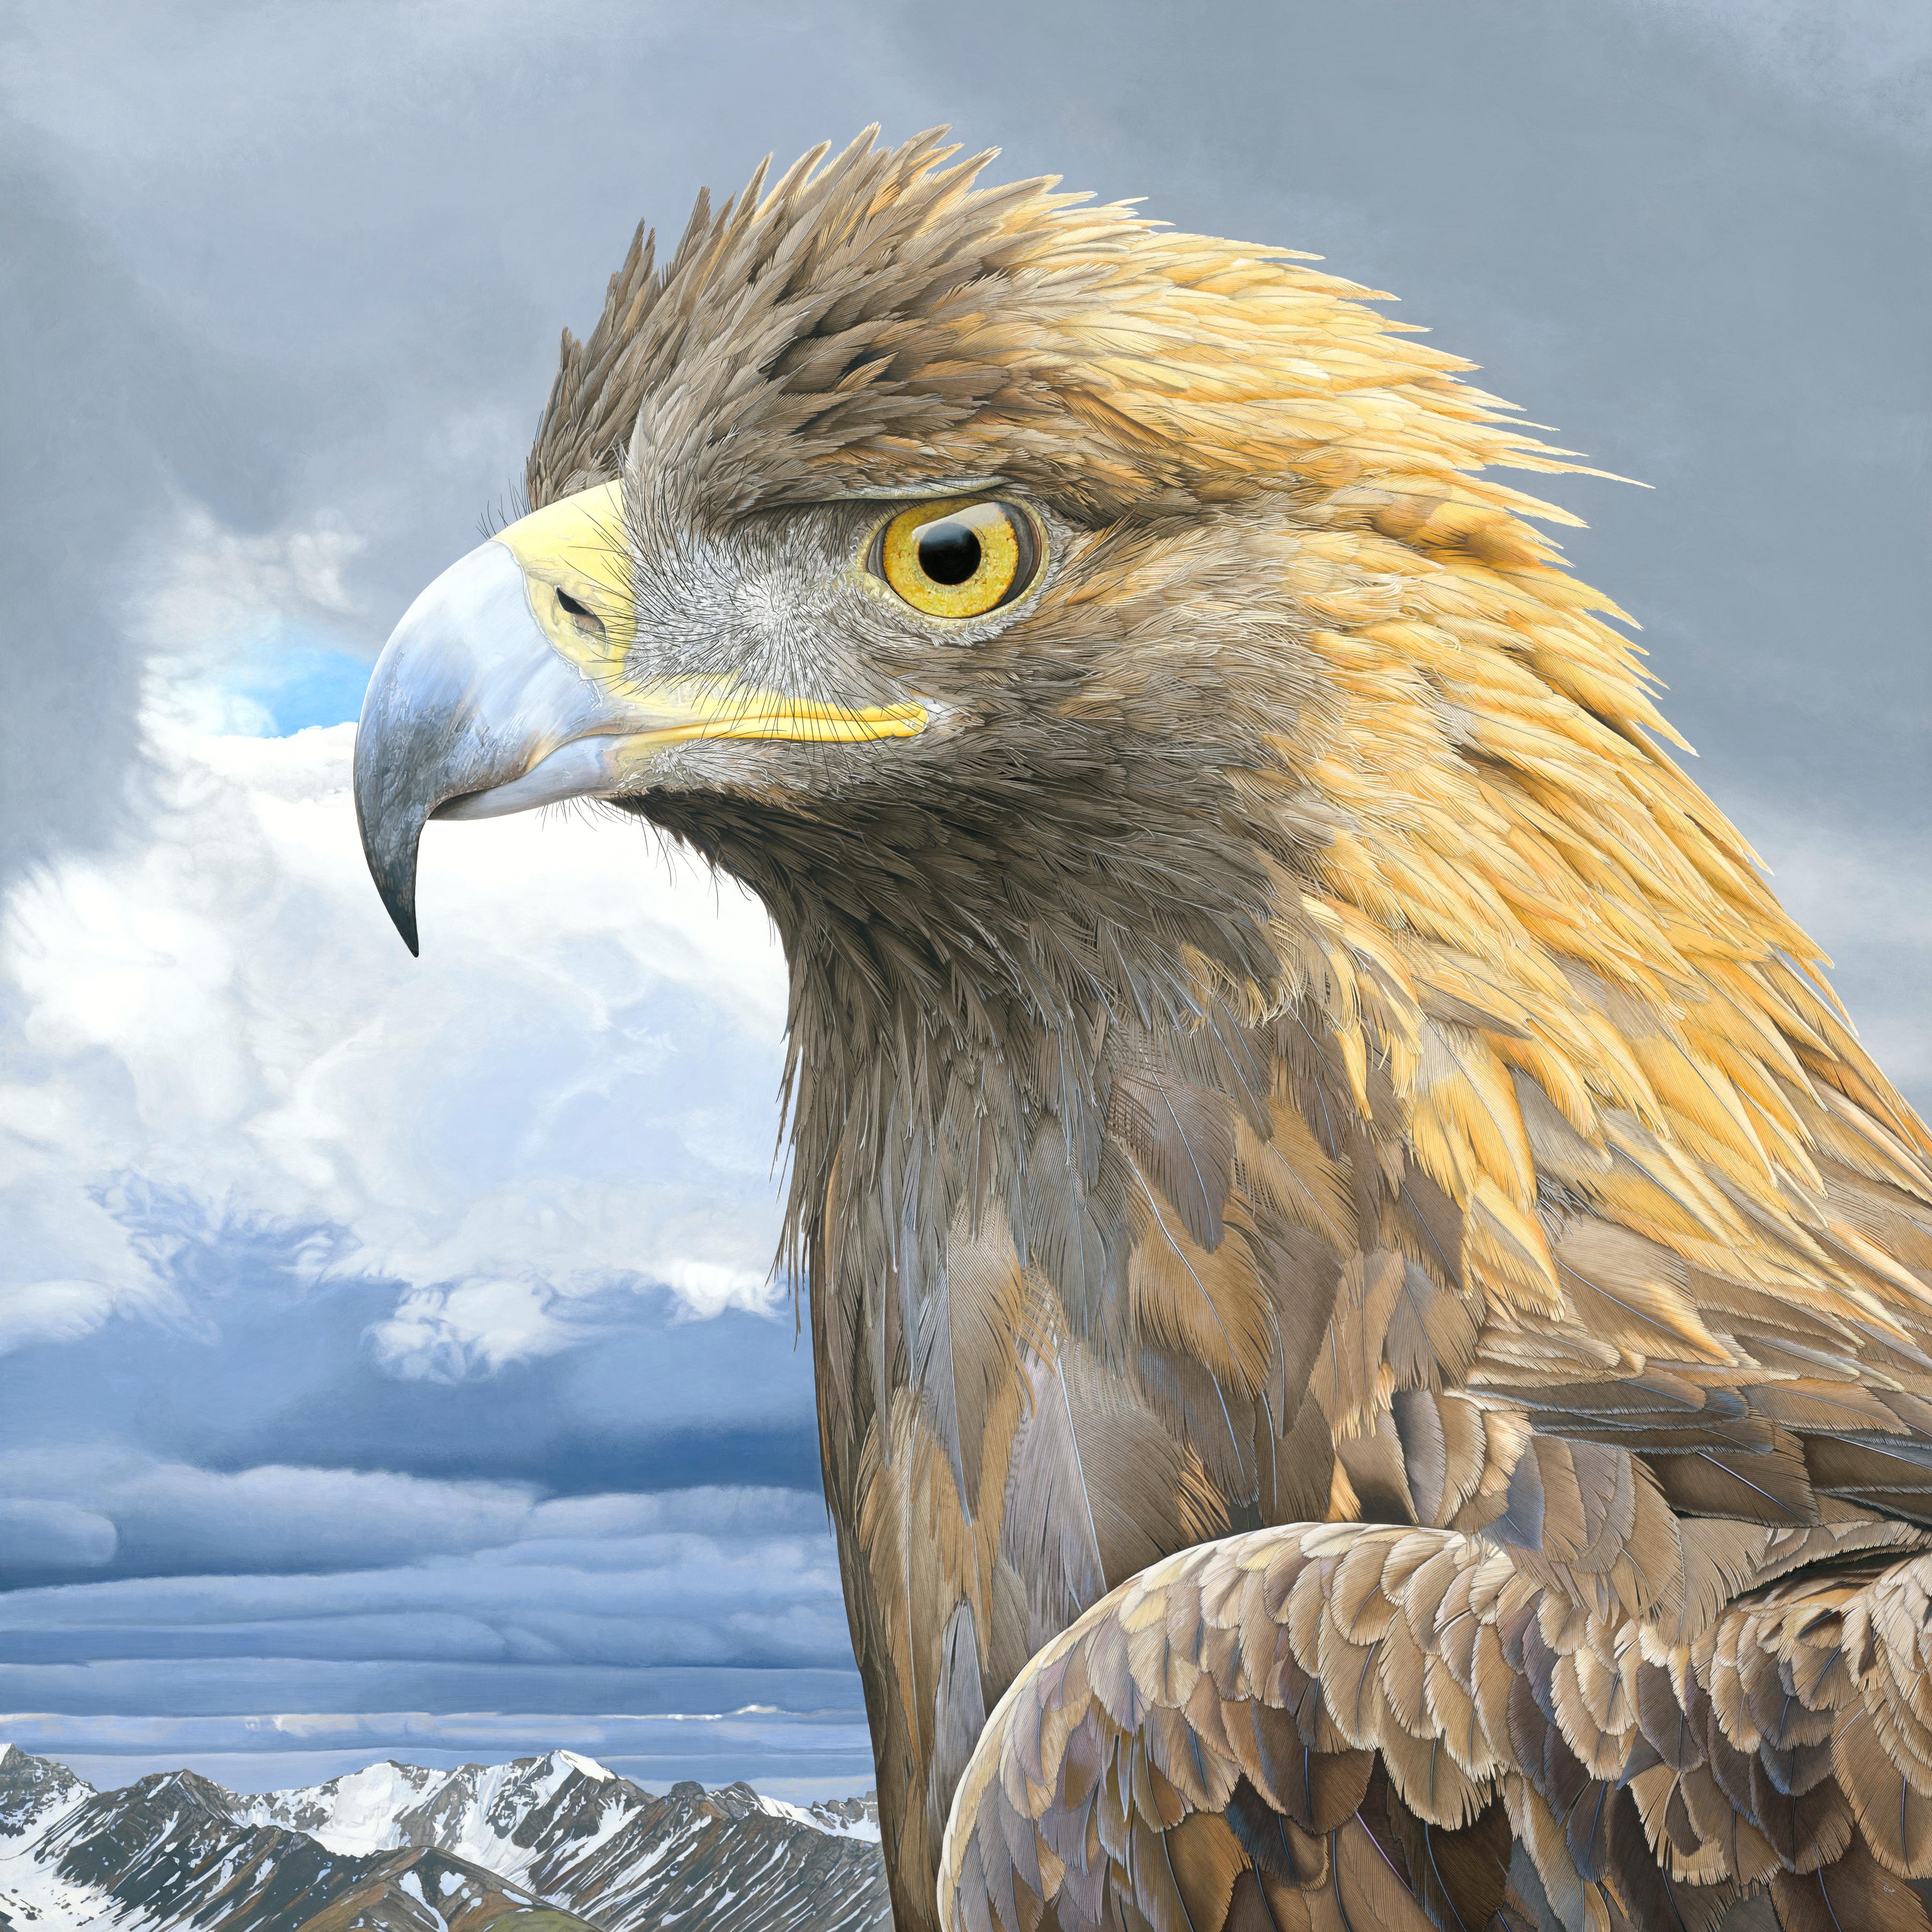 Polychrome Eagle - Photorealistic Portrait of a Golden Eagle In Denali, Framed